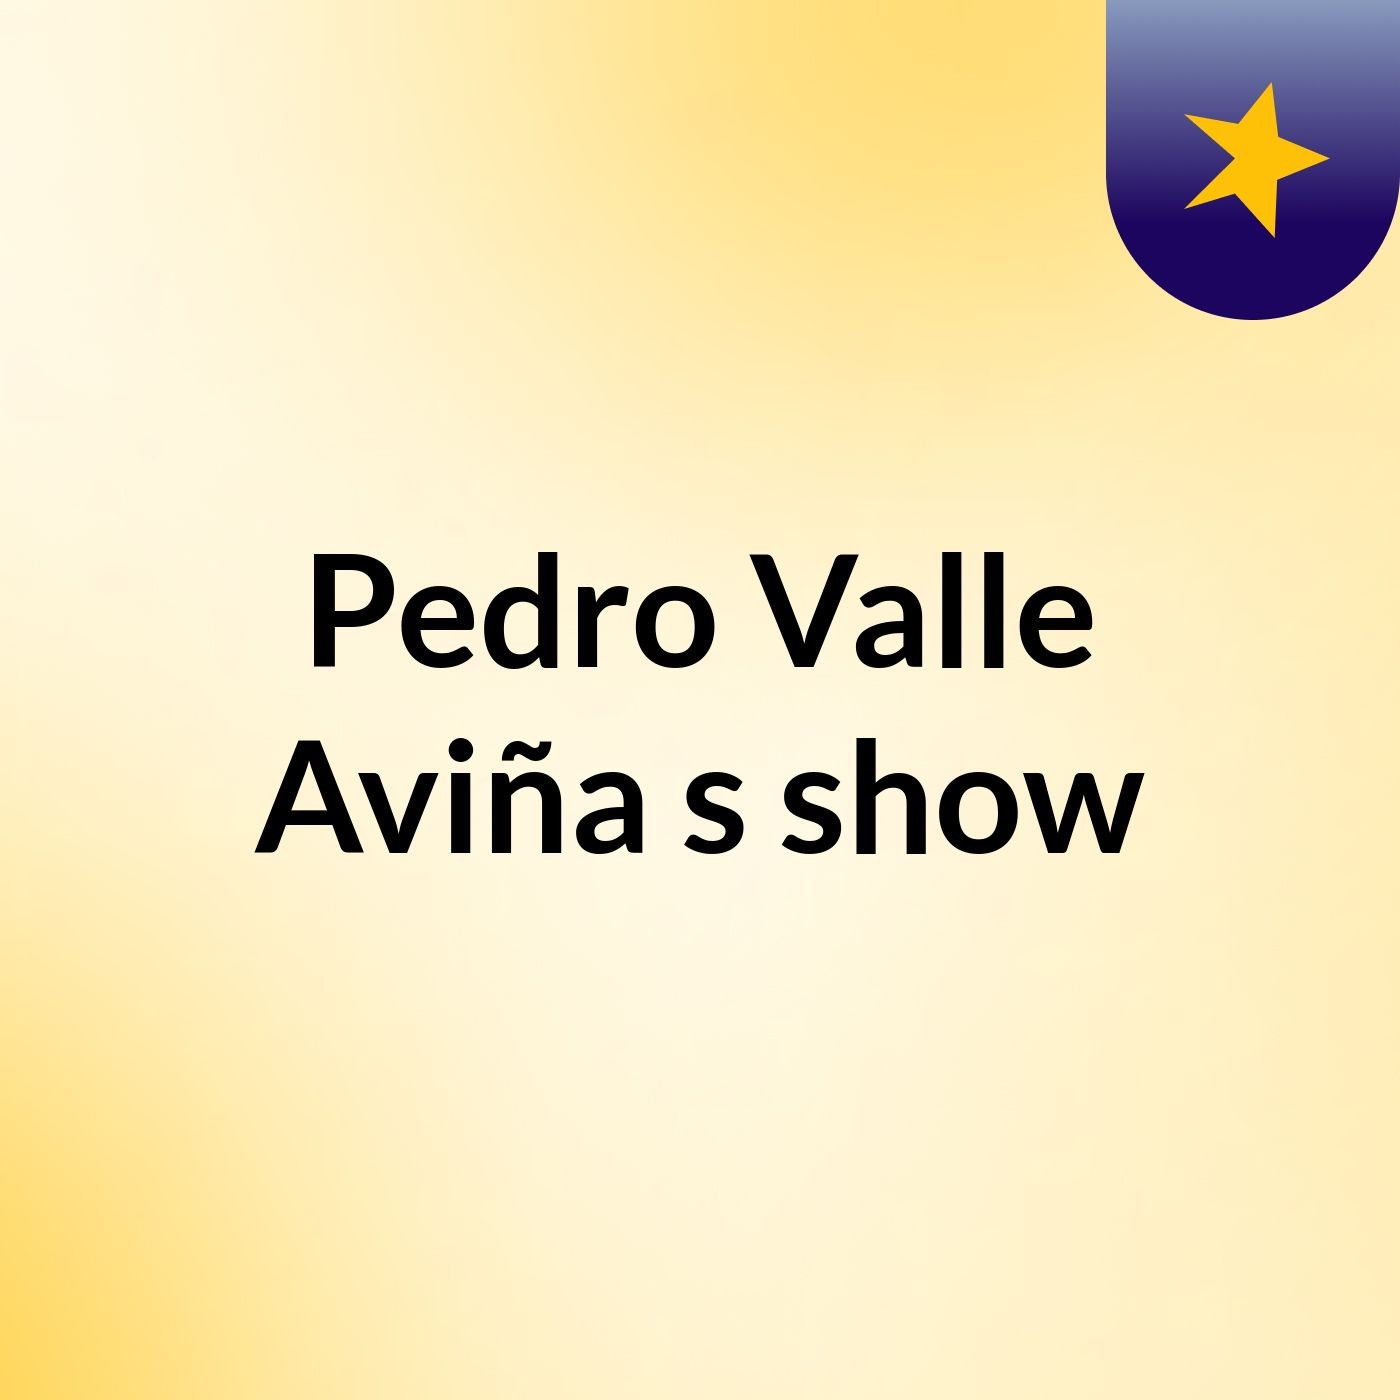 Episode 2 - Pedro Valle Aviña's show